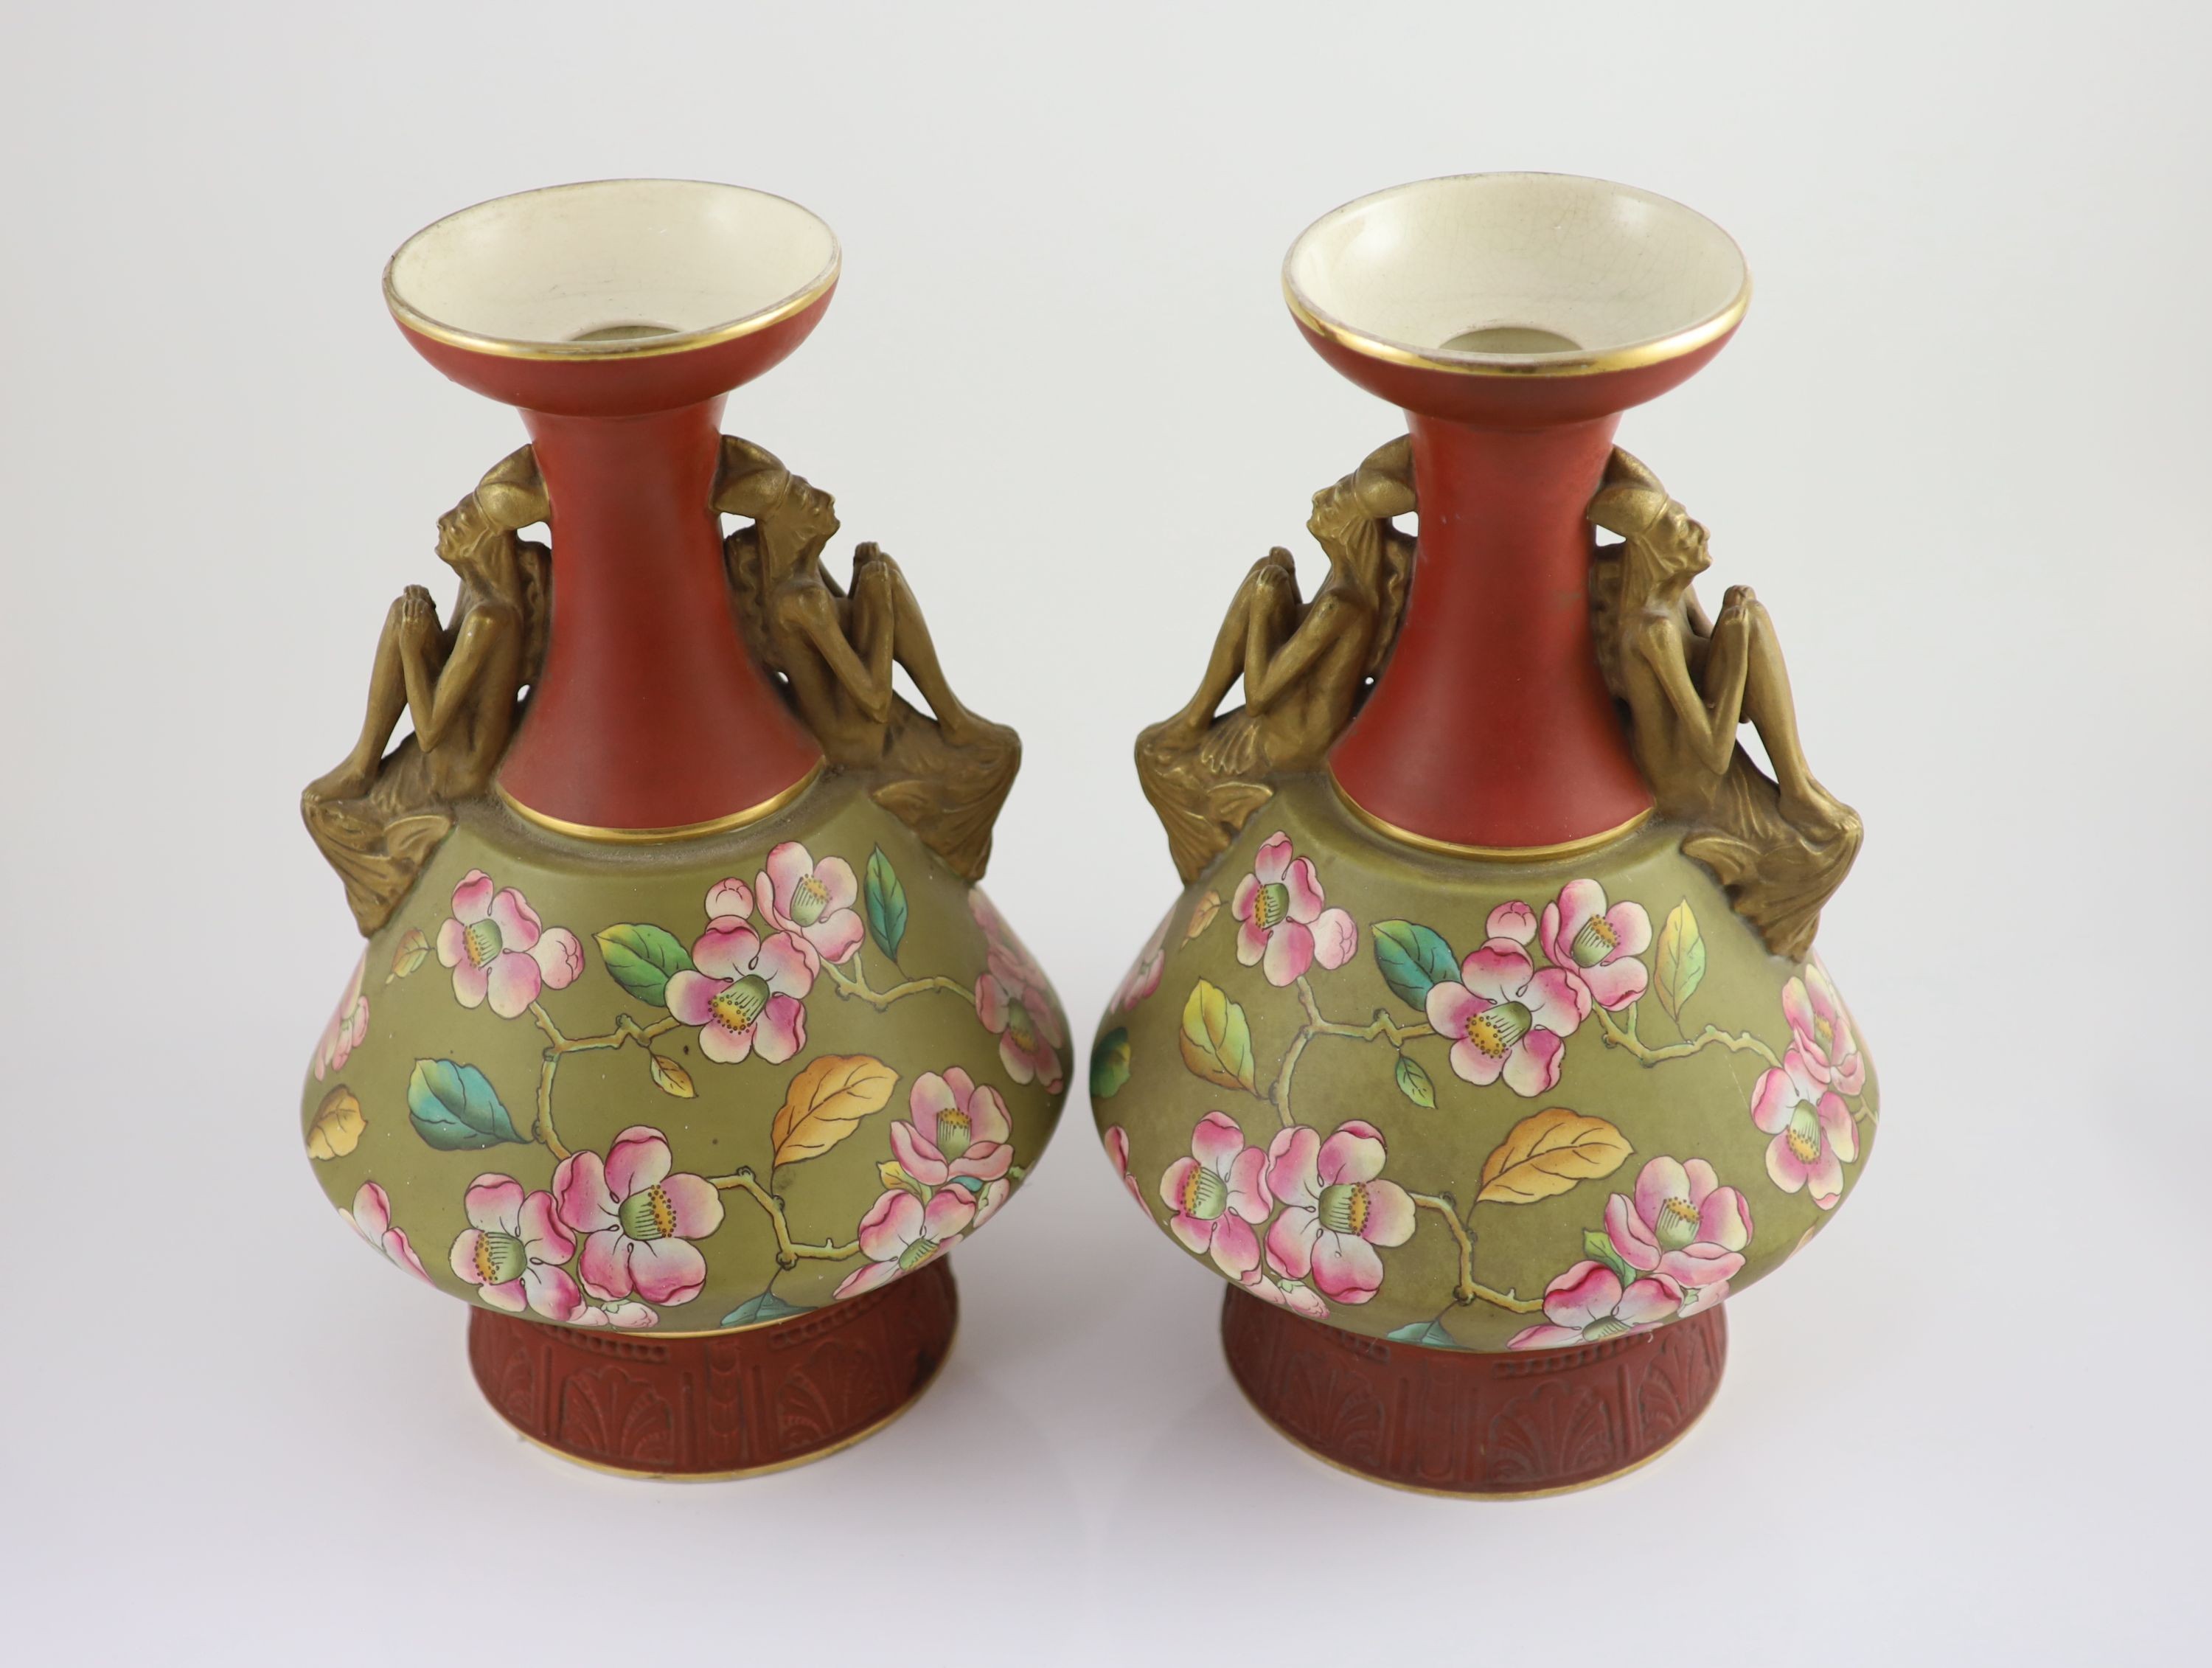 Christoper Dresser for Old Hall Earthenware Company Ltd, a pair of vases, c.1884, 36 cm high